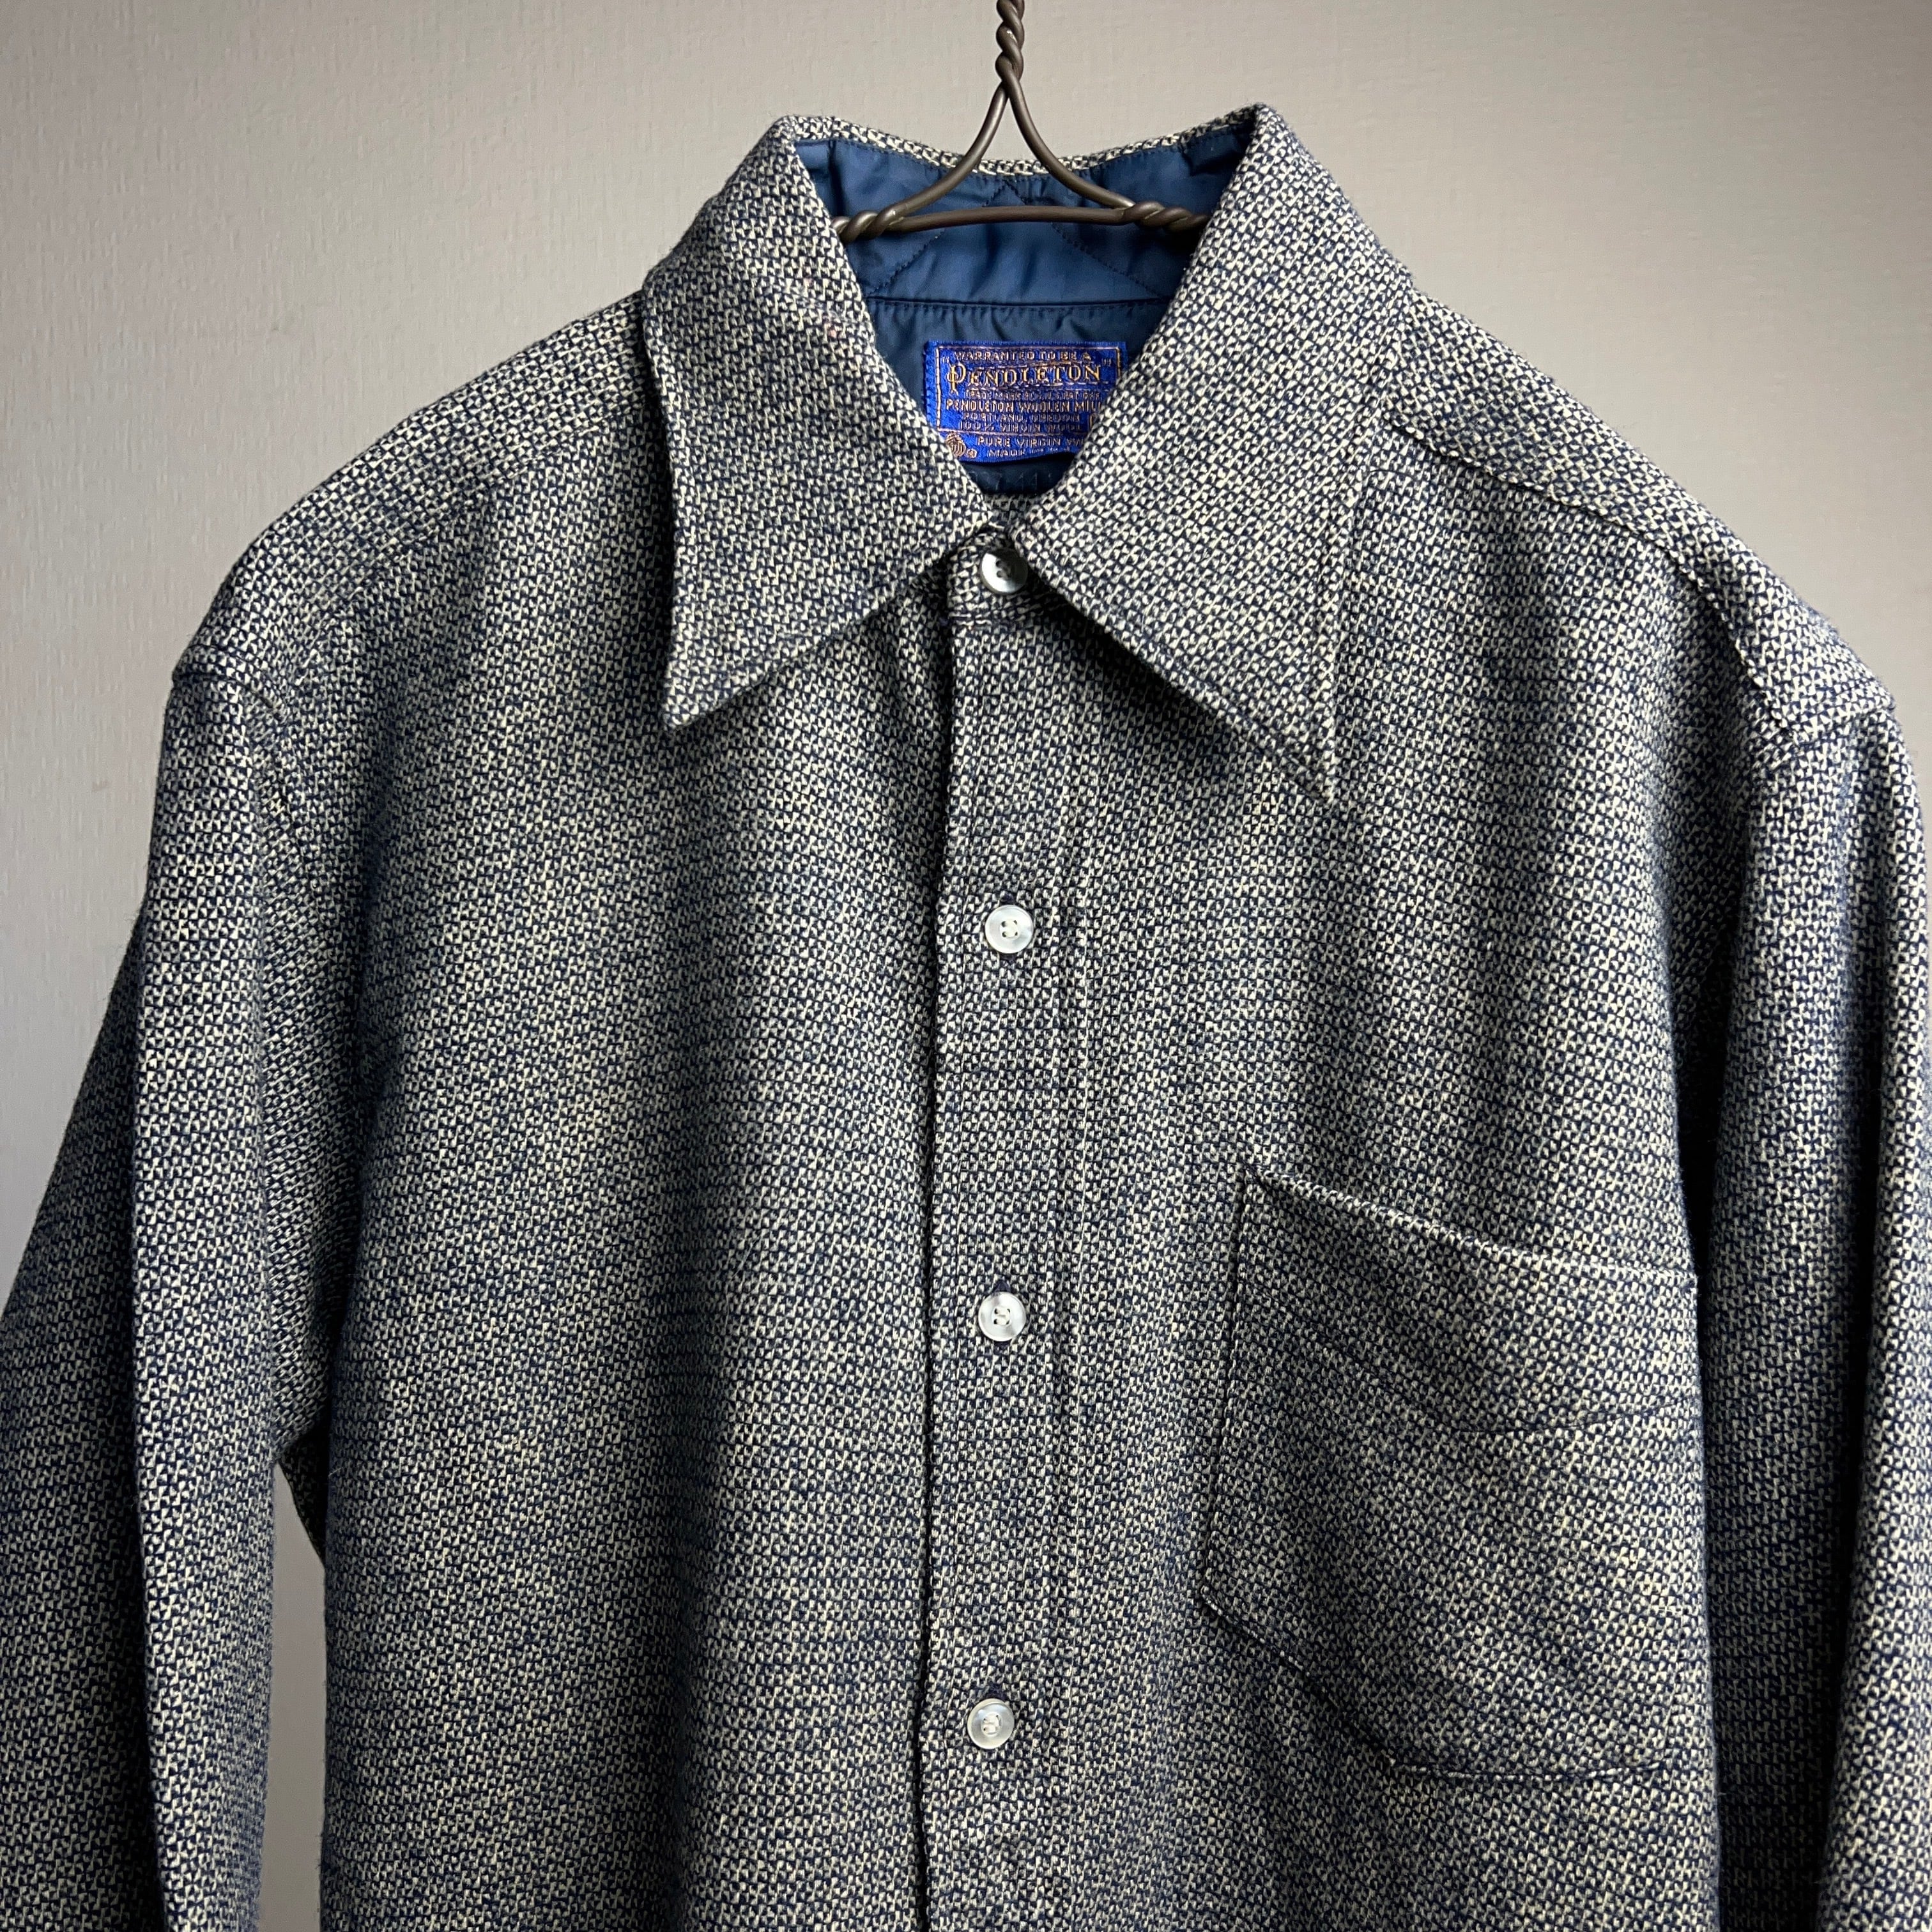 70's~80's “PENDLETON” Wool Shirt SIZE M USA製 70年代〜80年代 ペンドルトン ウールシャツ レア柄 総柄  【0929A28】【送料無料】